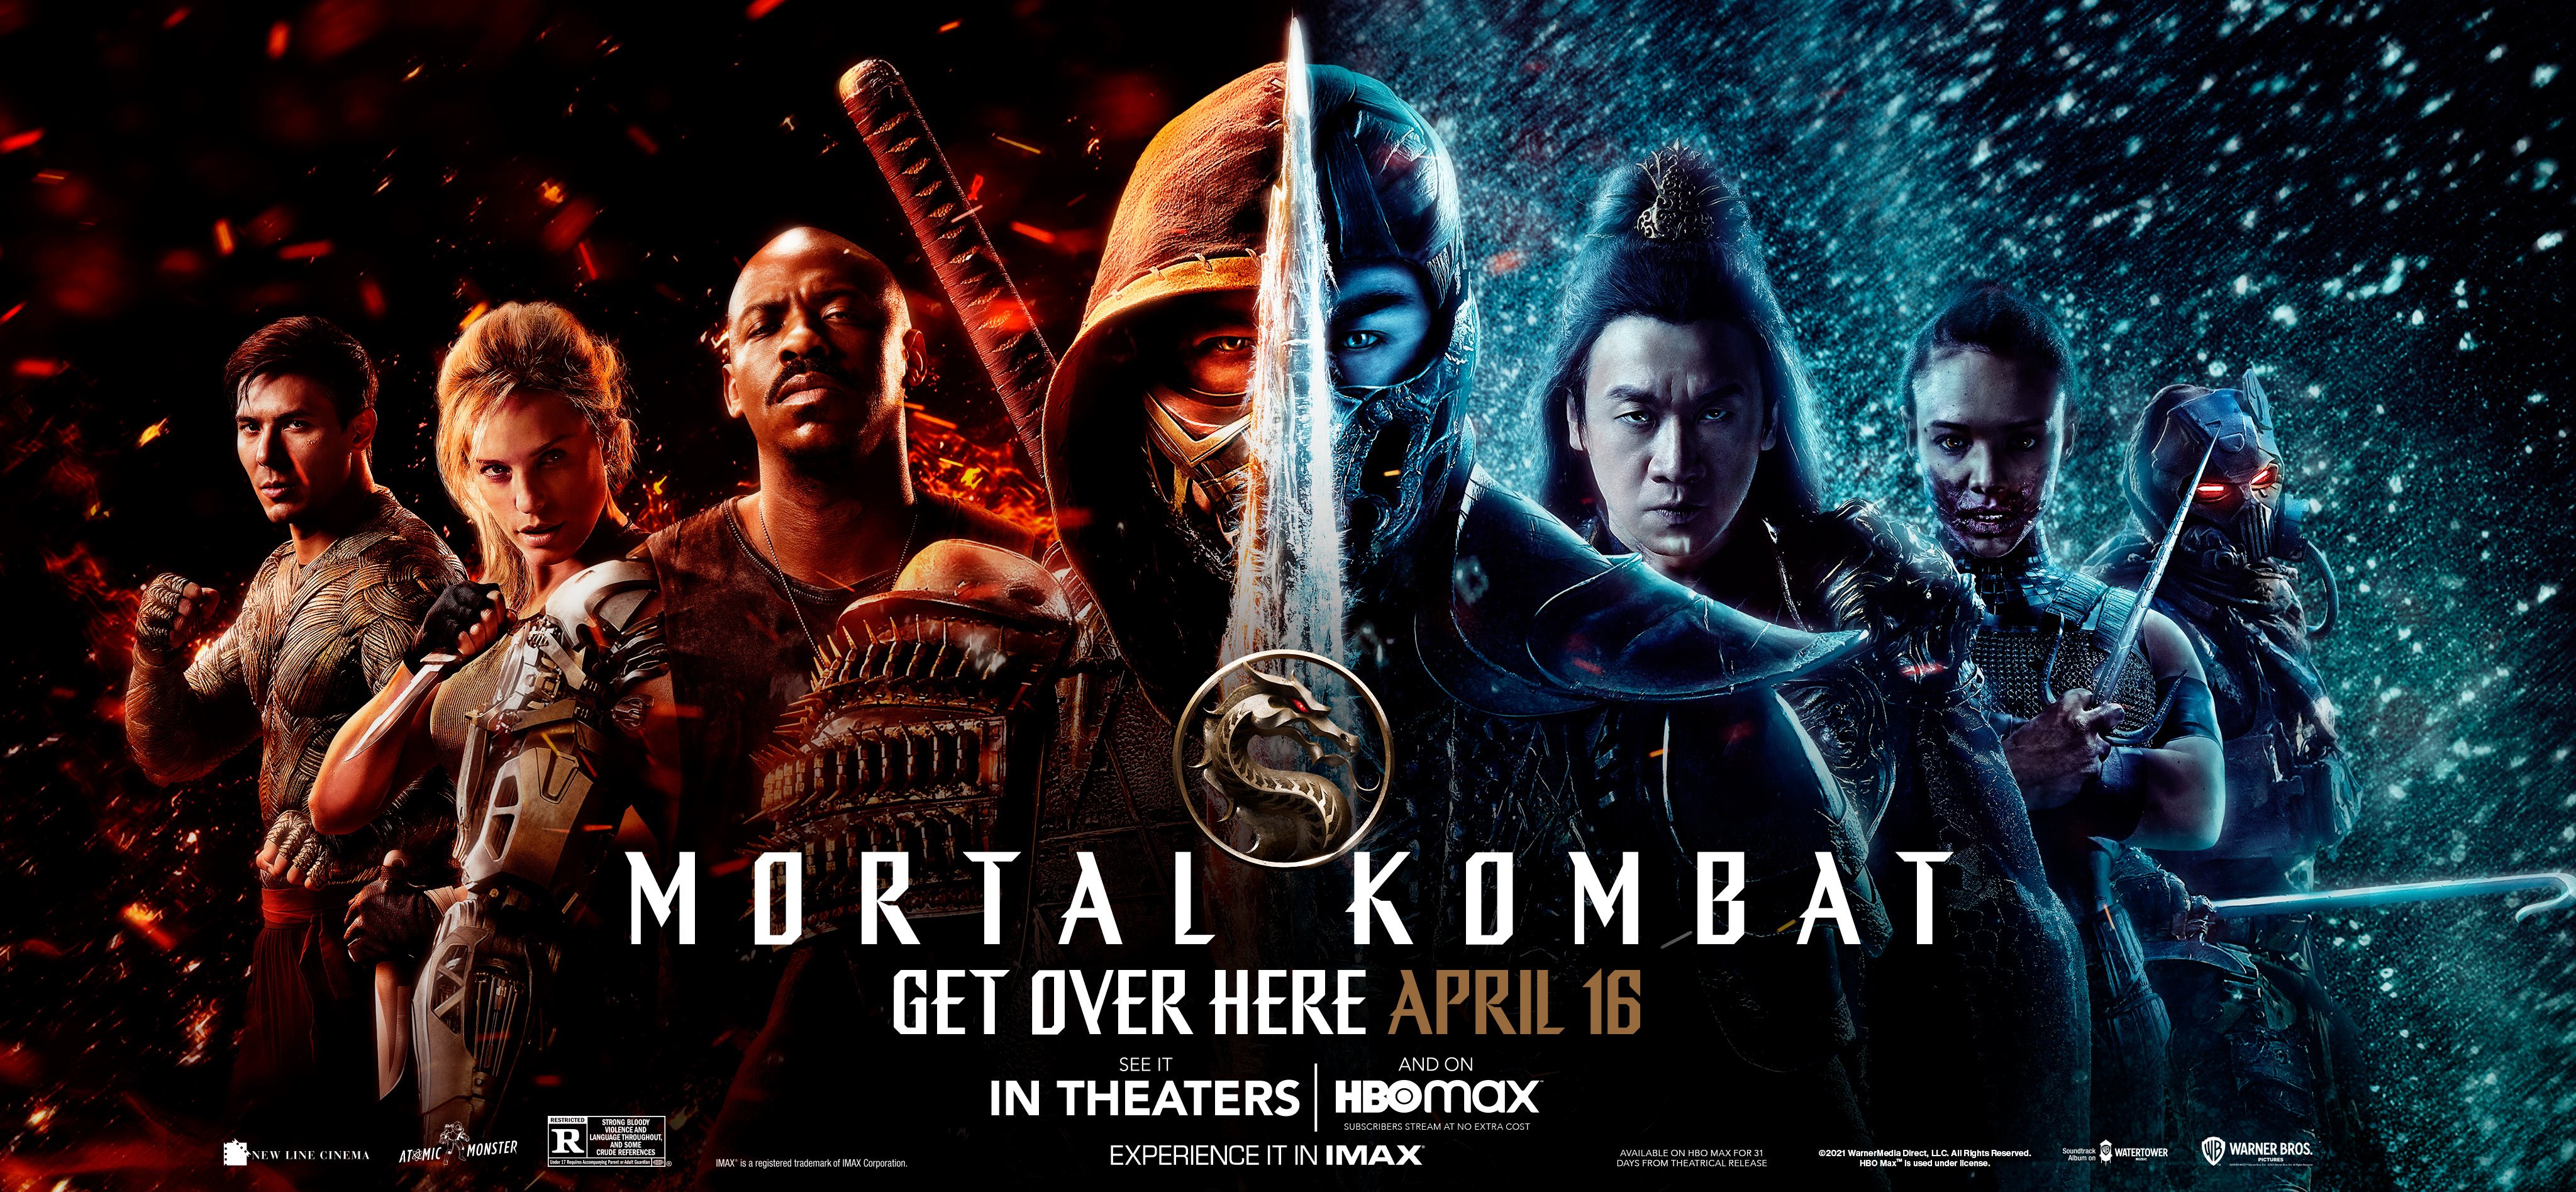 download mortal kombat legends 3rd movie